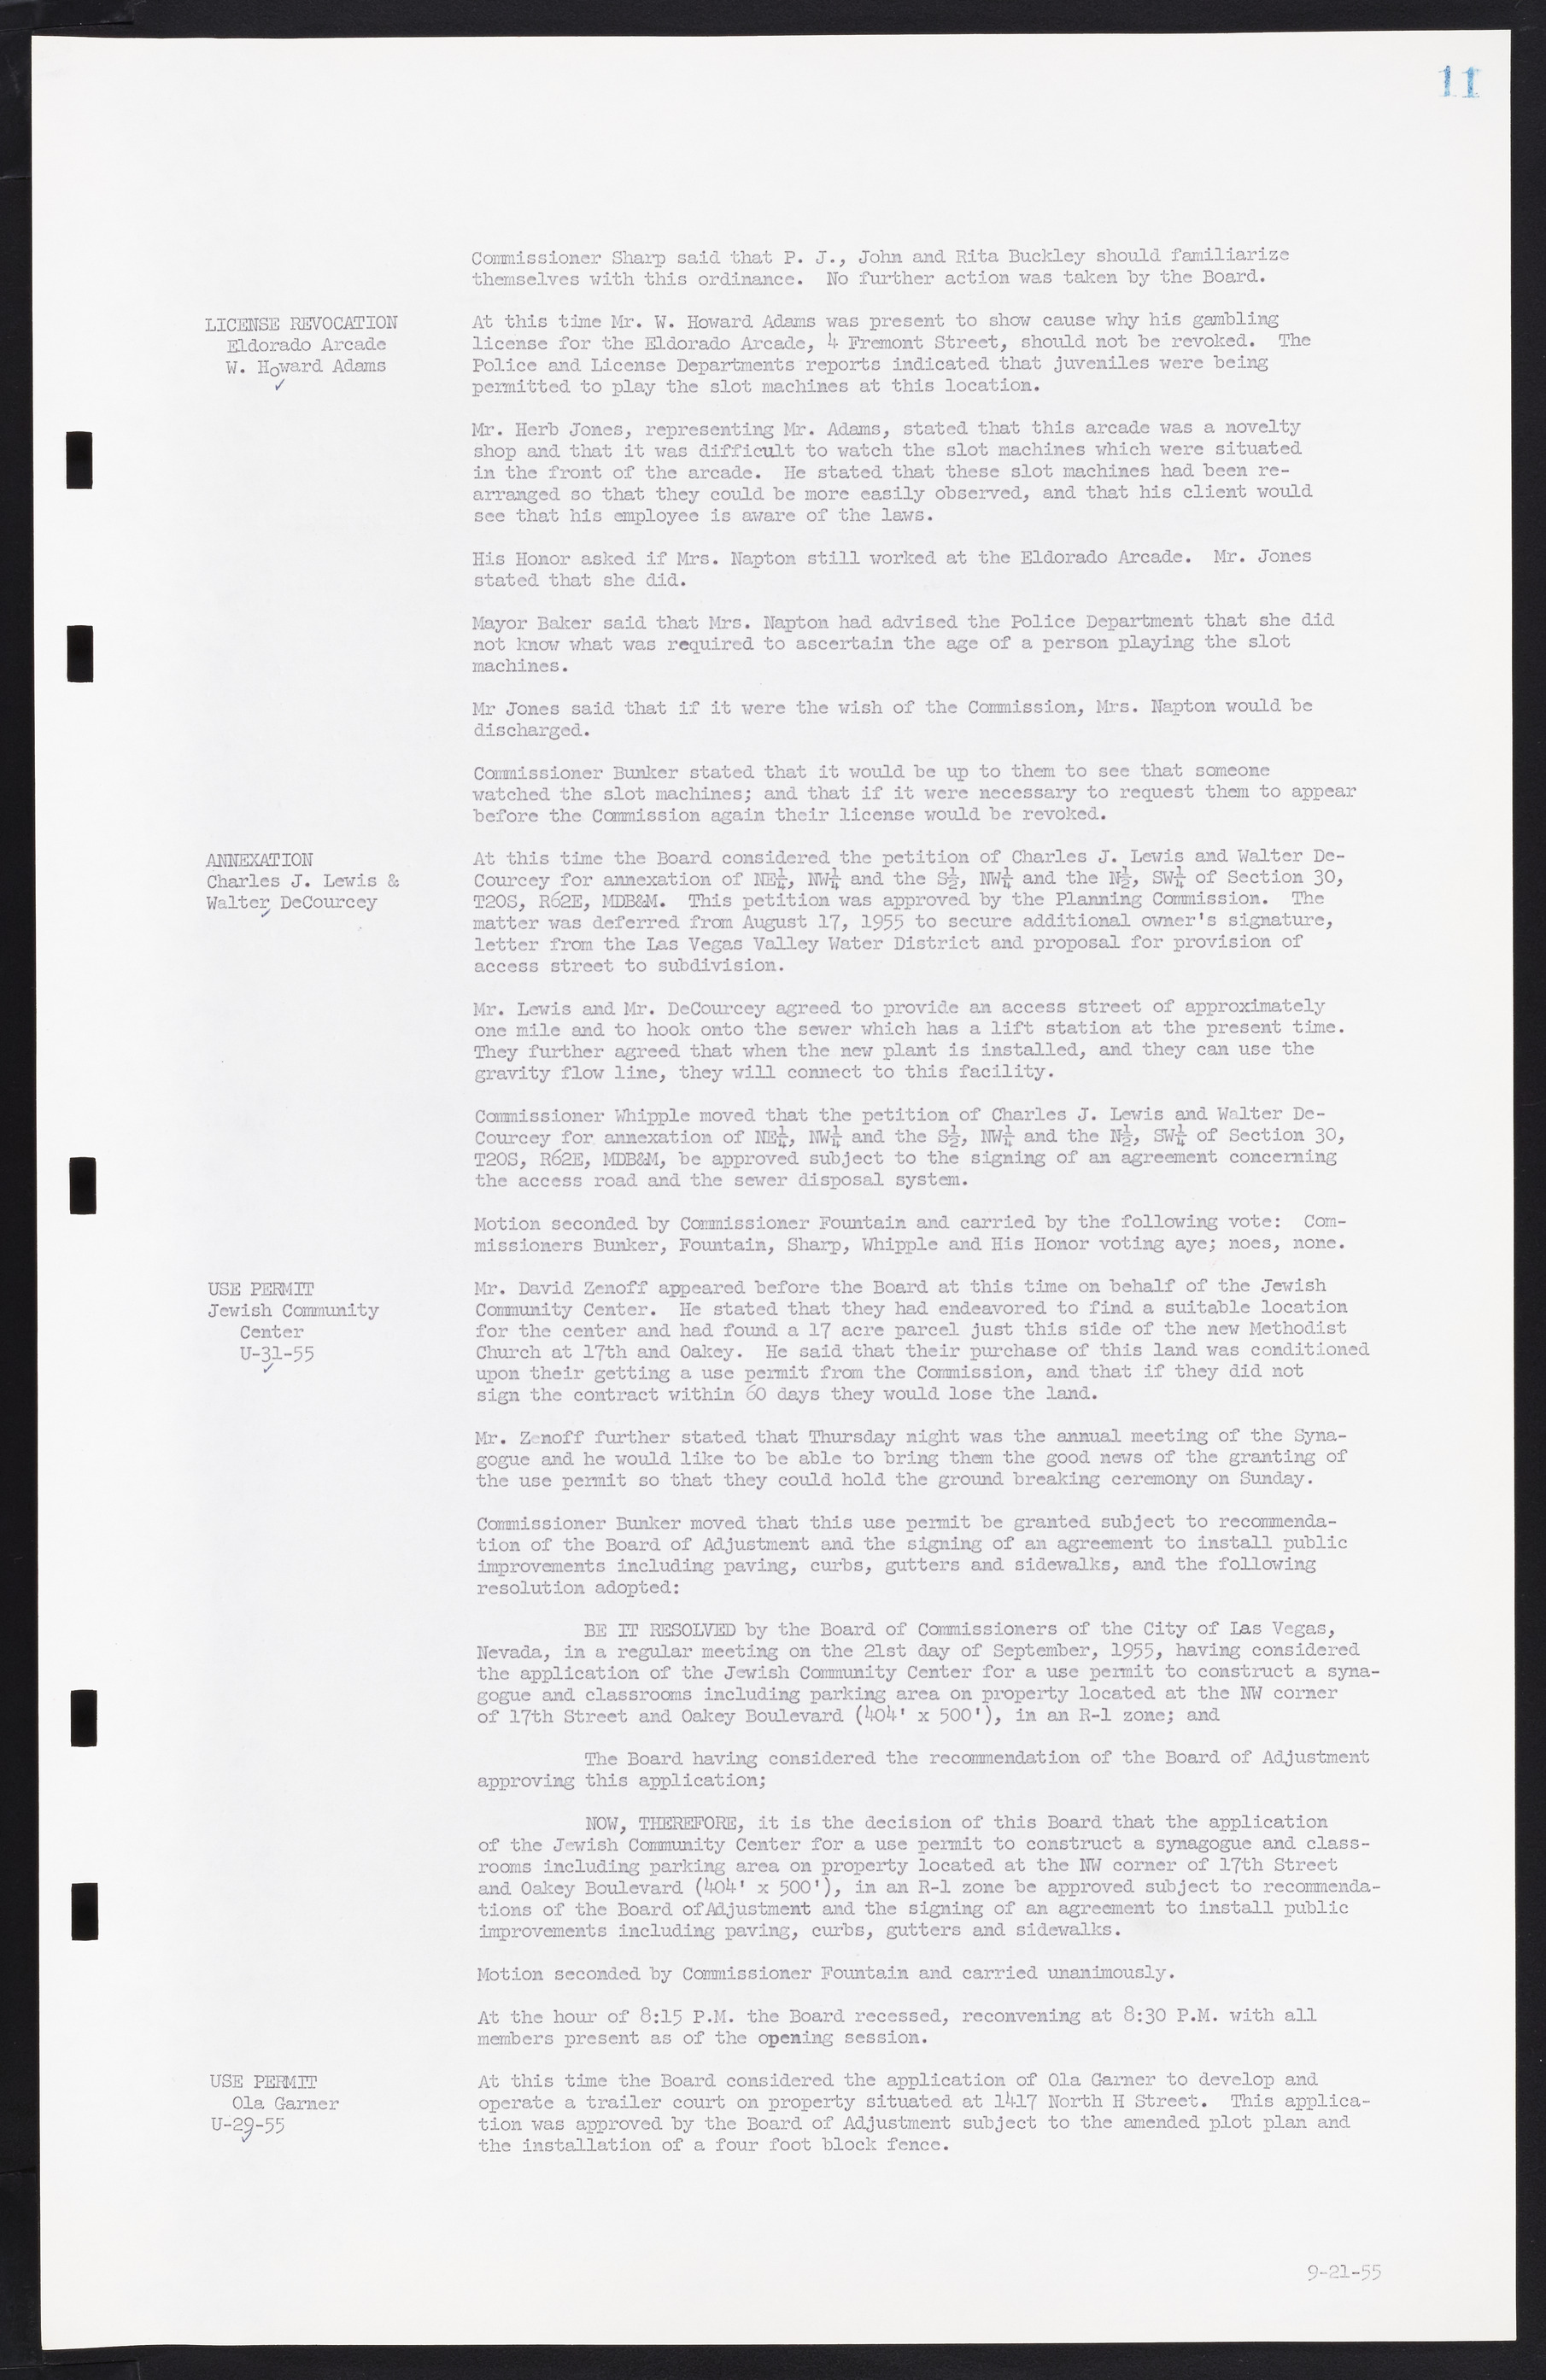 Las Vegas City Commission Minutes, September 21, 1955 to November 20, 1957, lvc000010-17